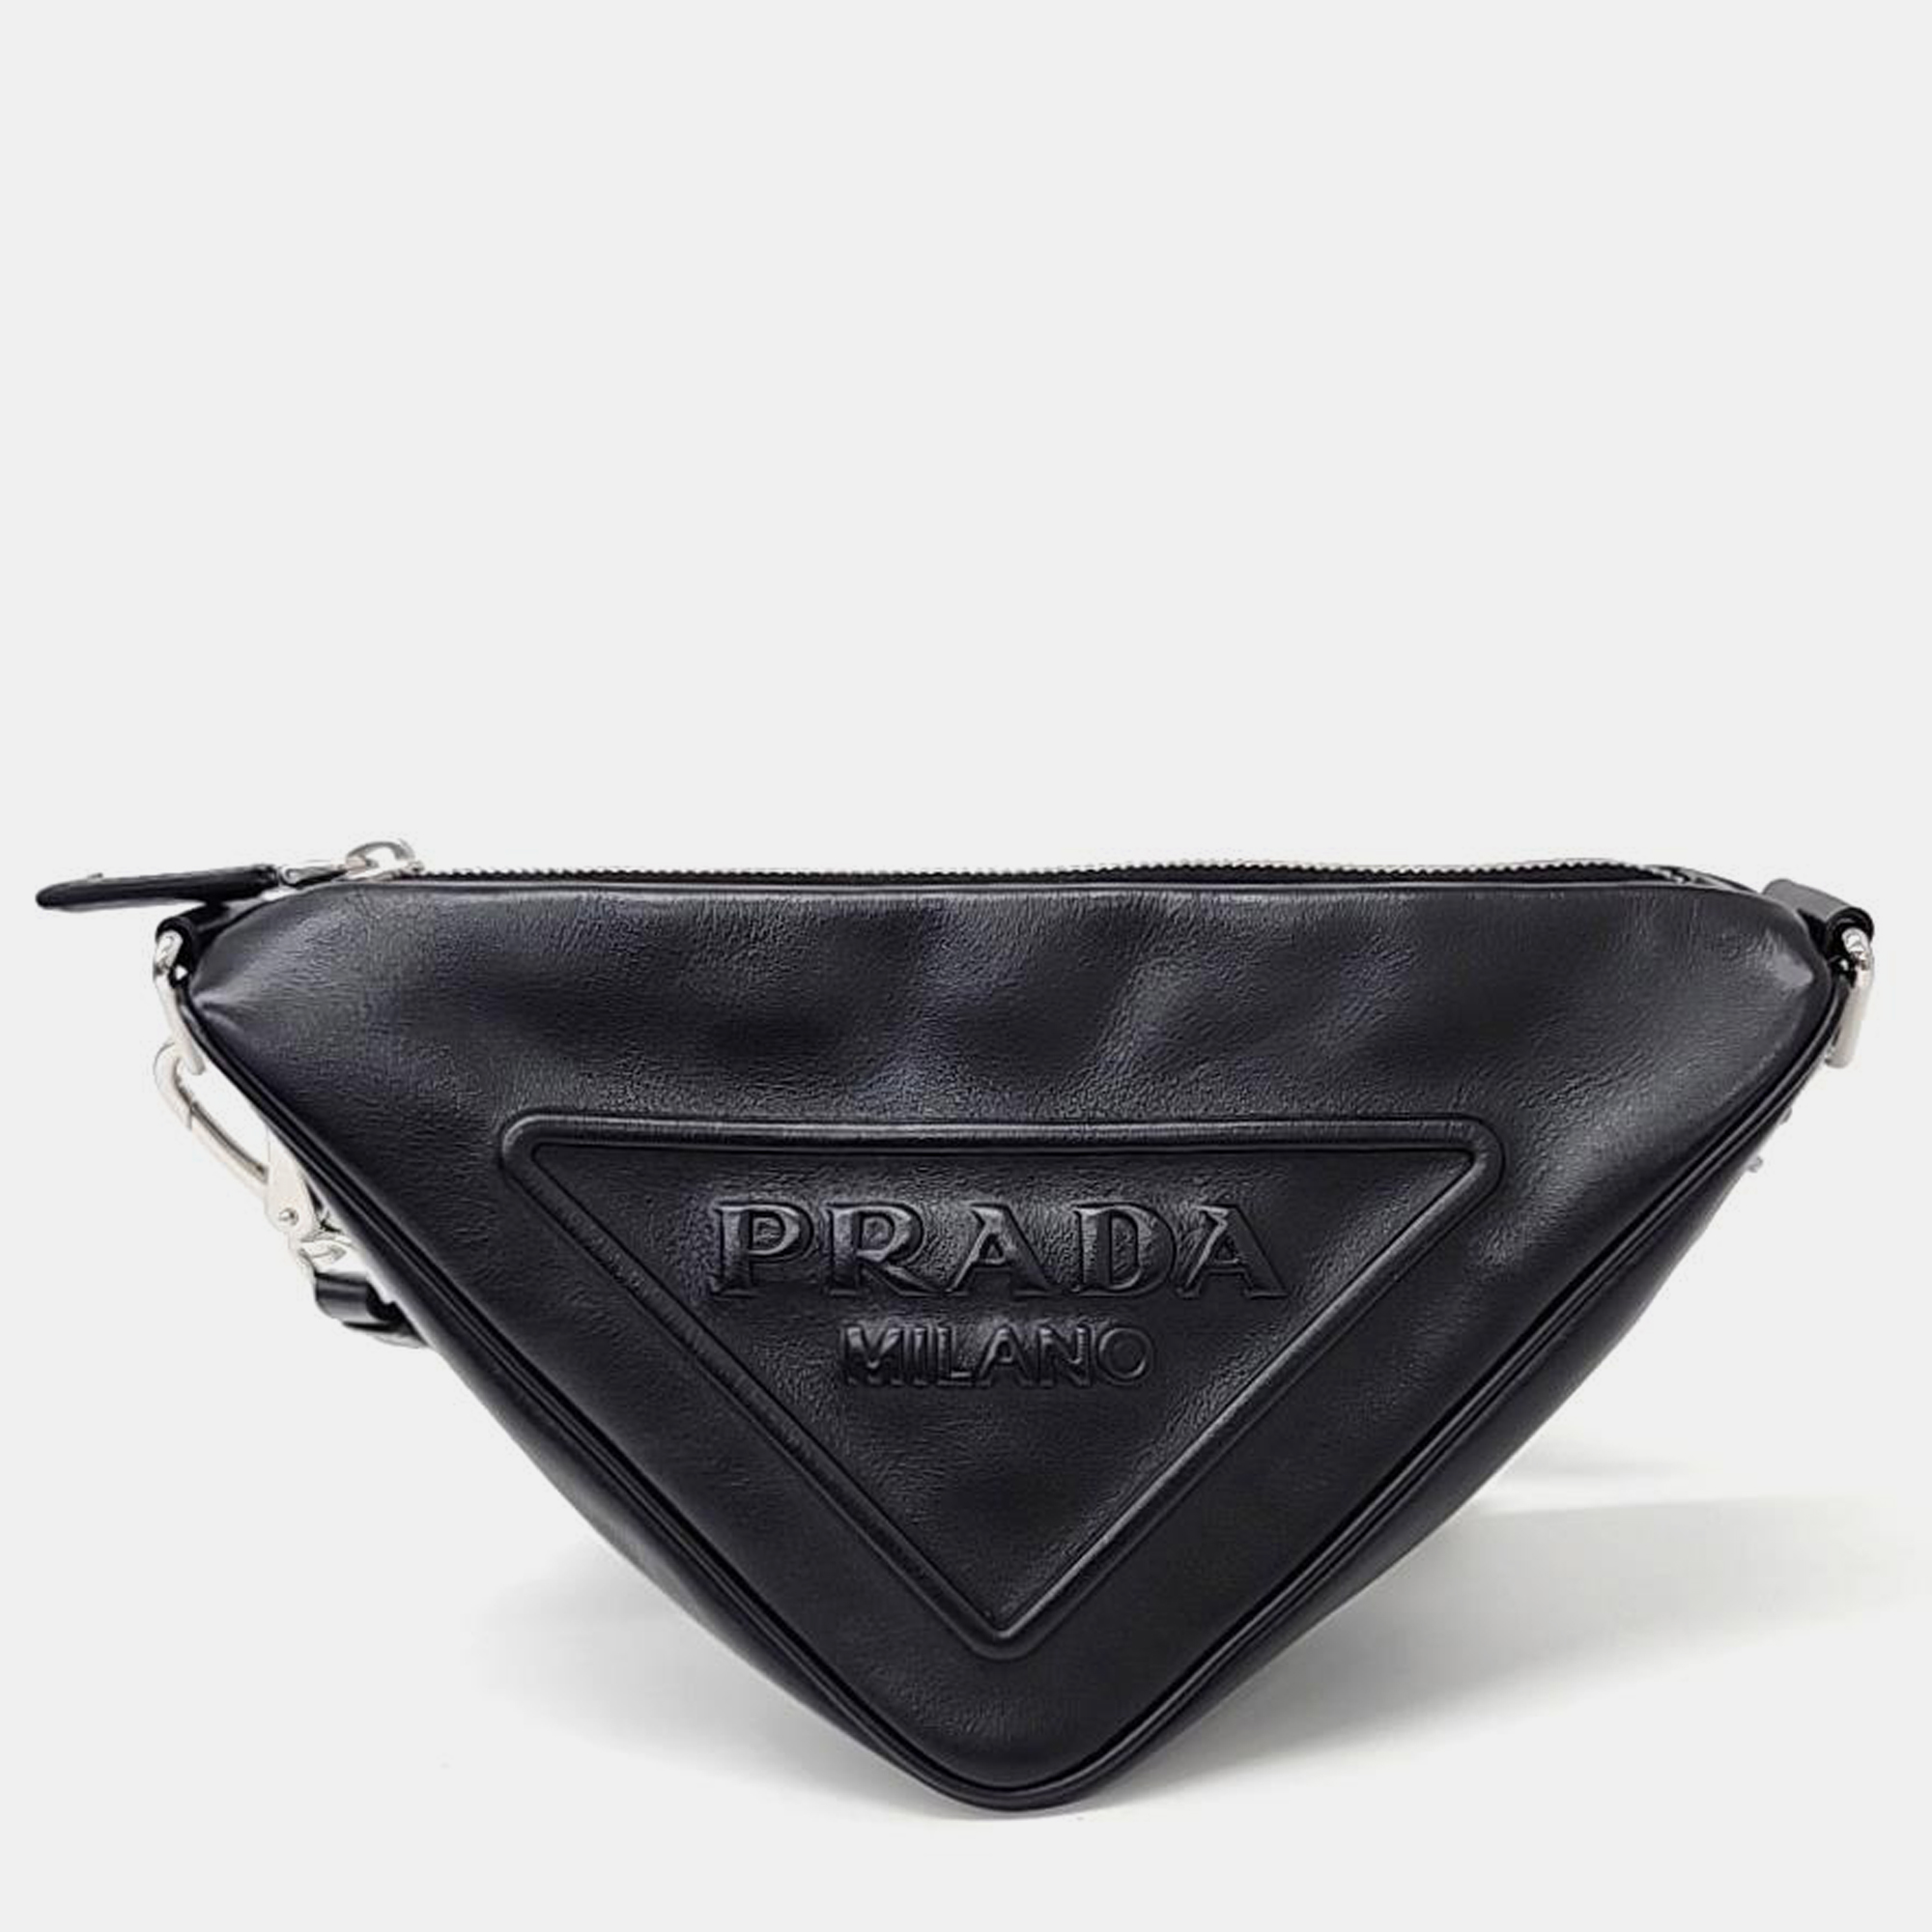 Prada black glace lux leather triangle shoulder bag